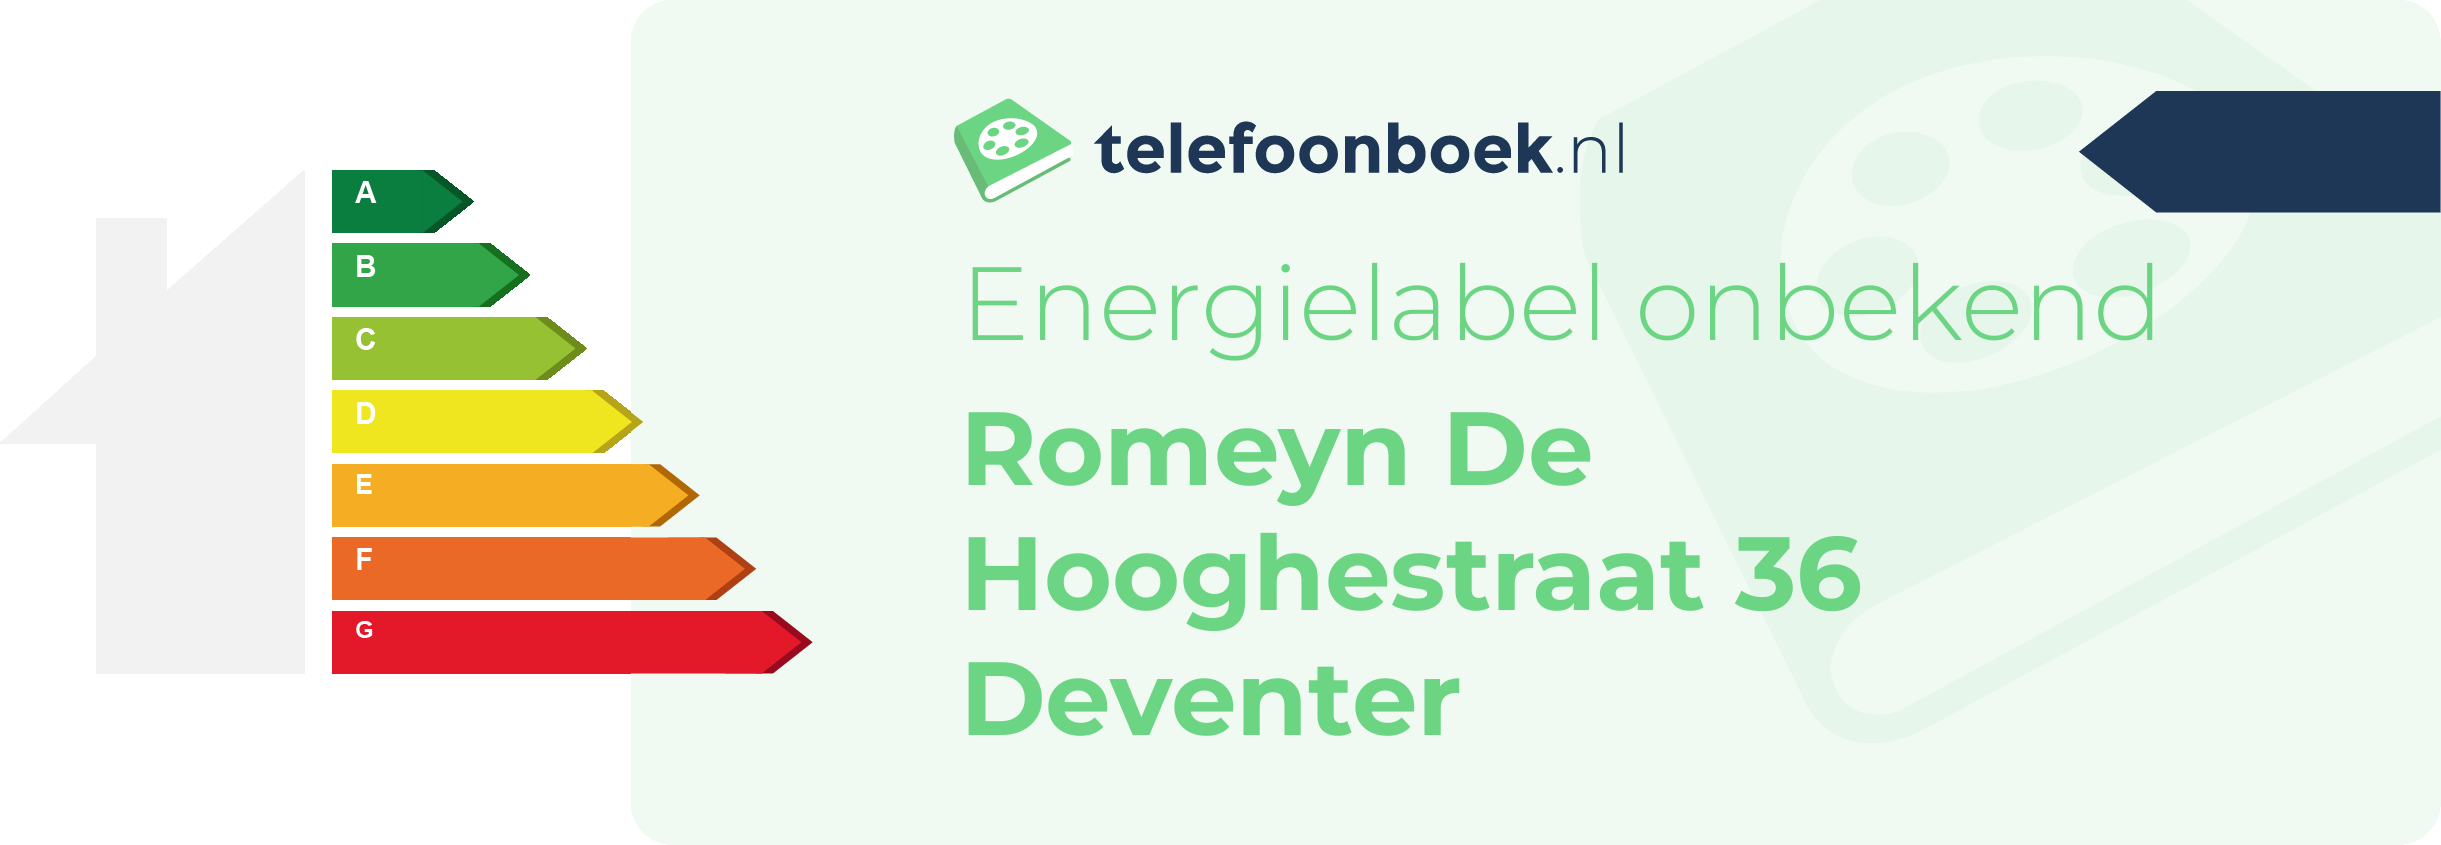 Energielabel Romeyn De Hooghestraat 36 Deventer